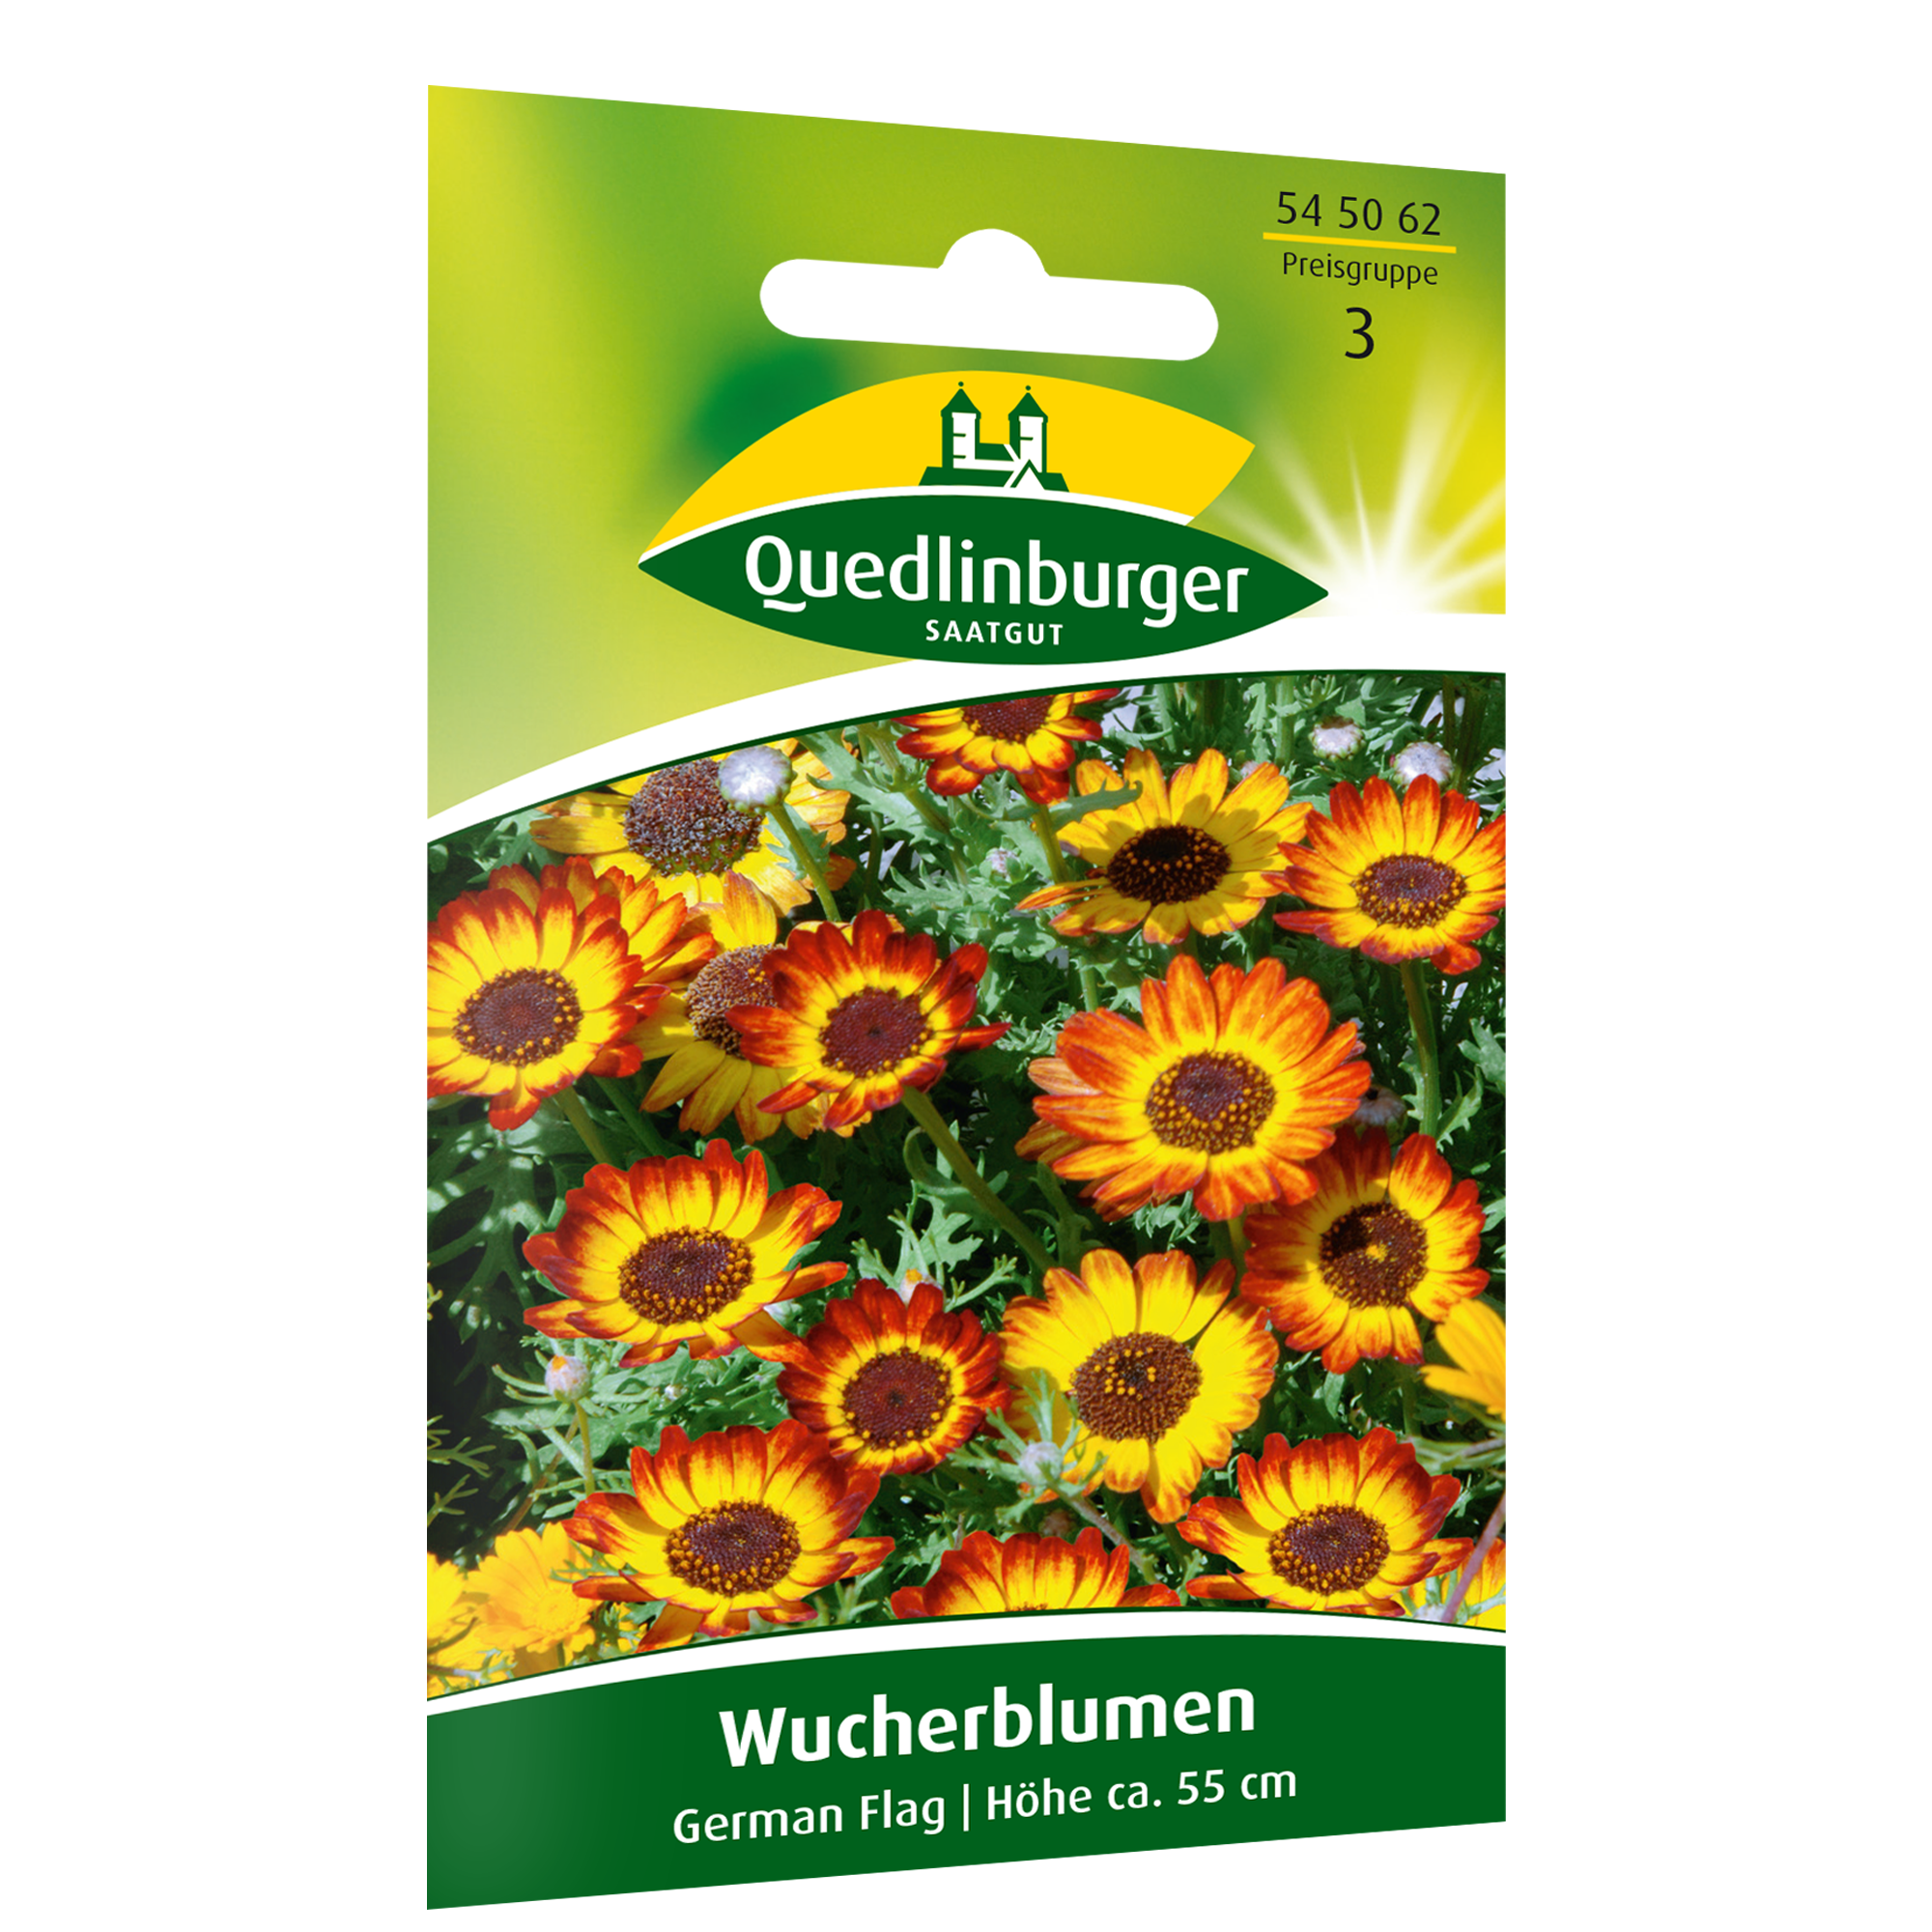 Wucherblumen 'German Flag' + product picture